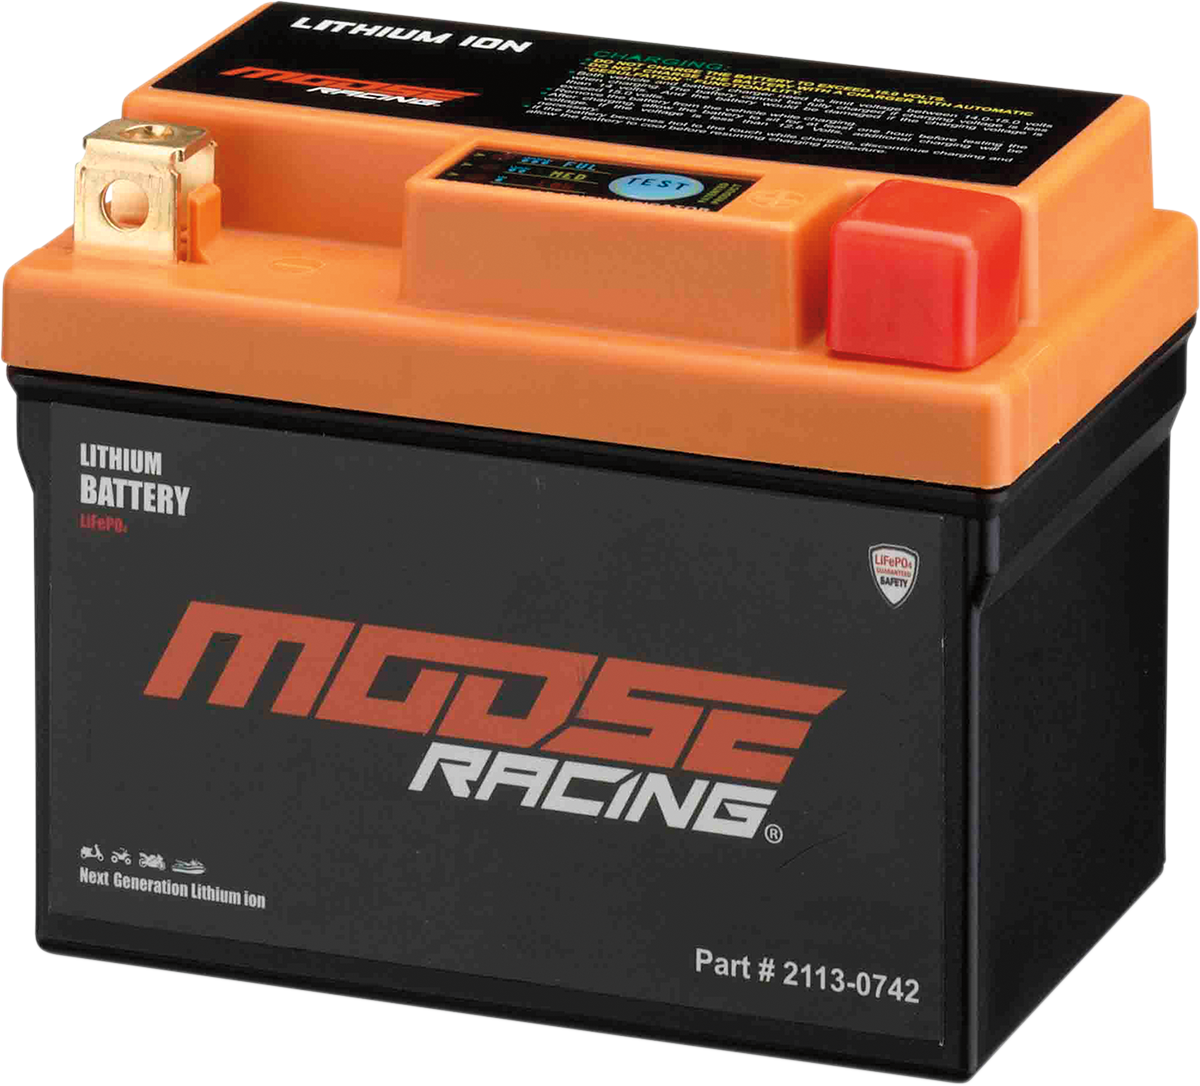 MOOSE RACING Li-Ion Battery - HUTZ5S-FP HUTZ5S-FP